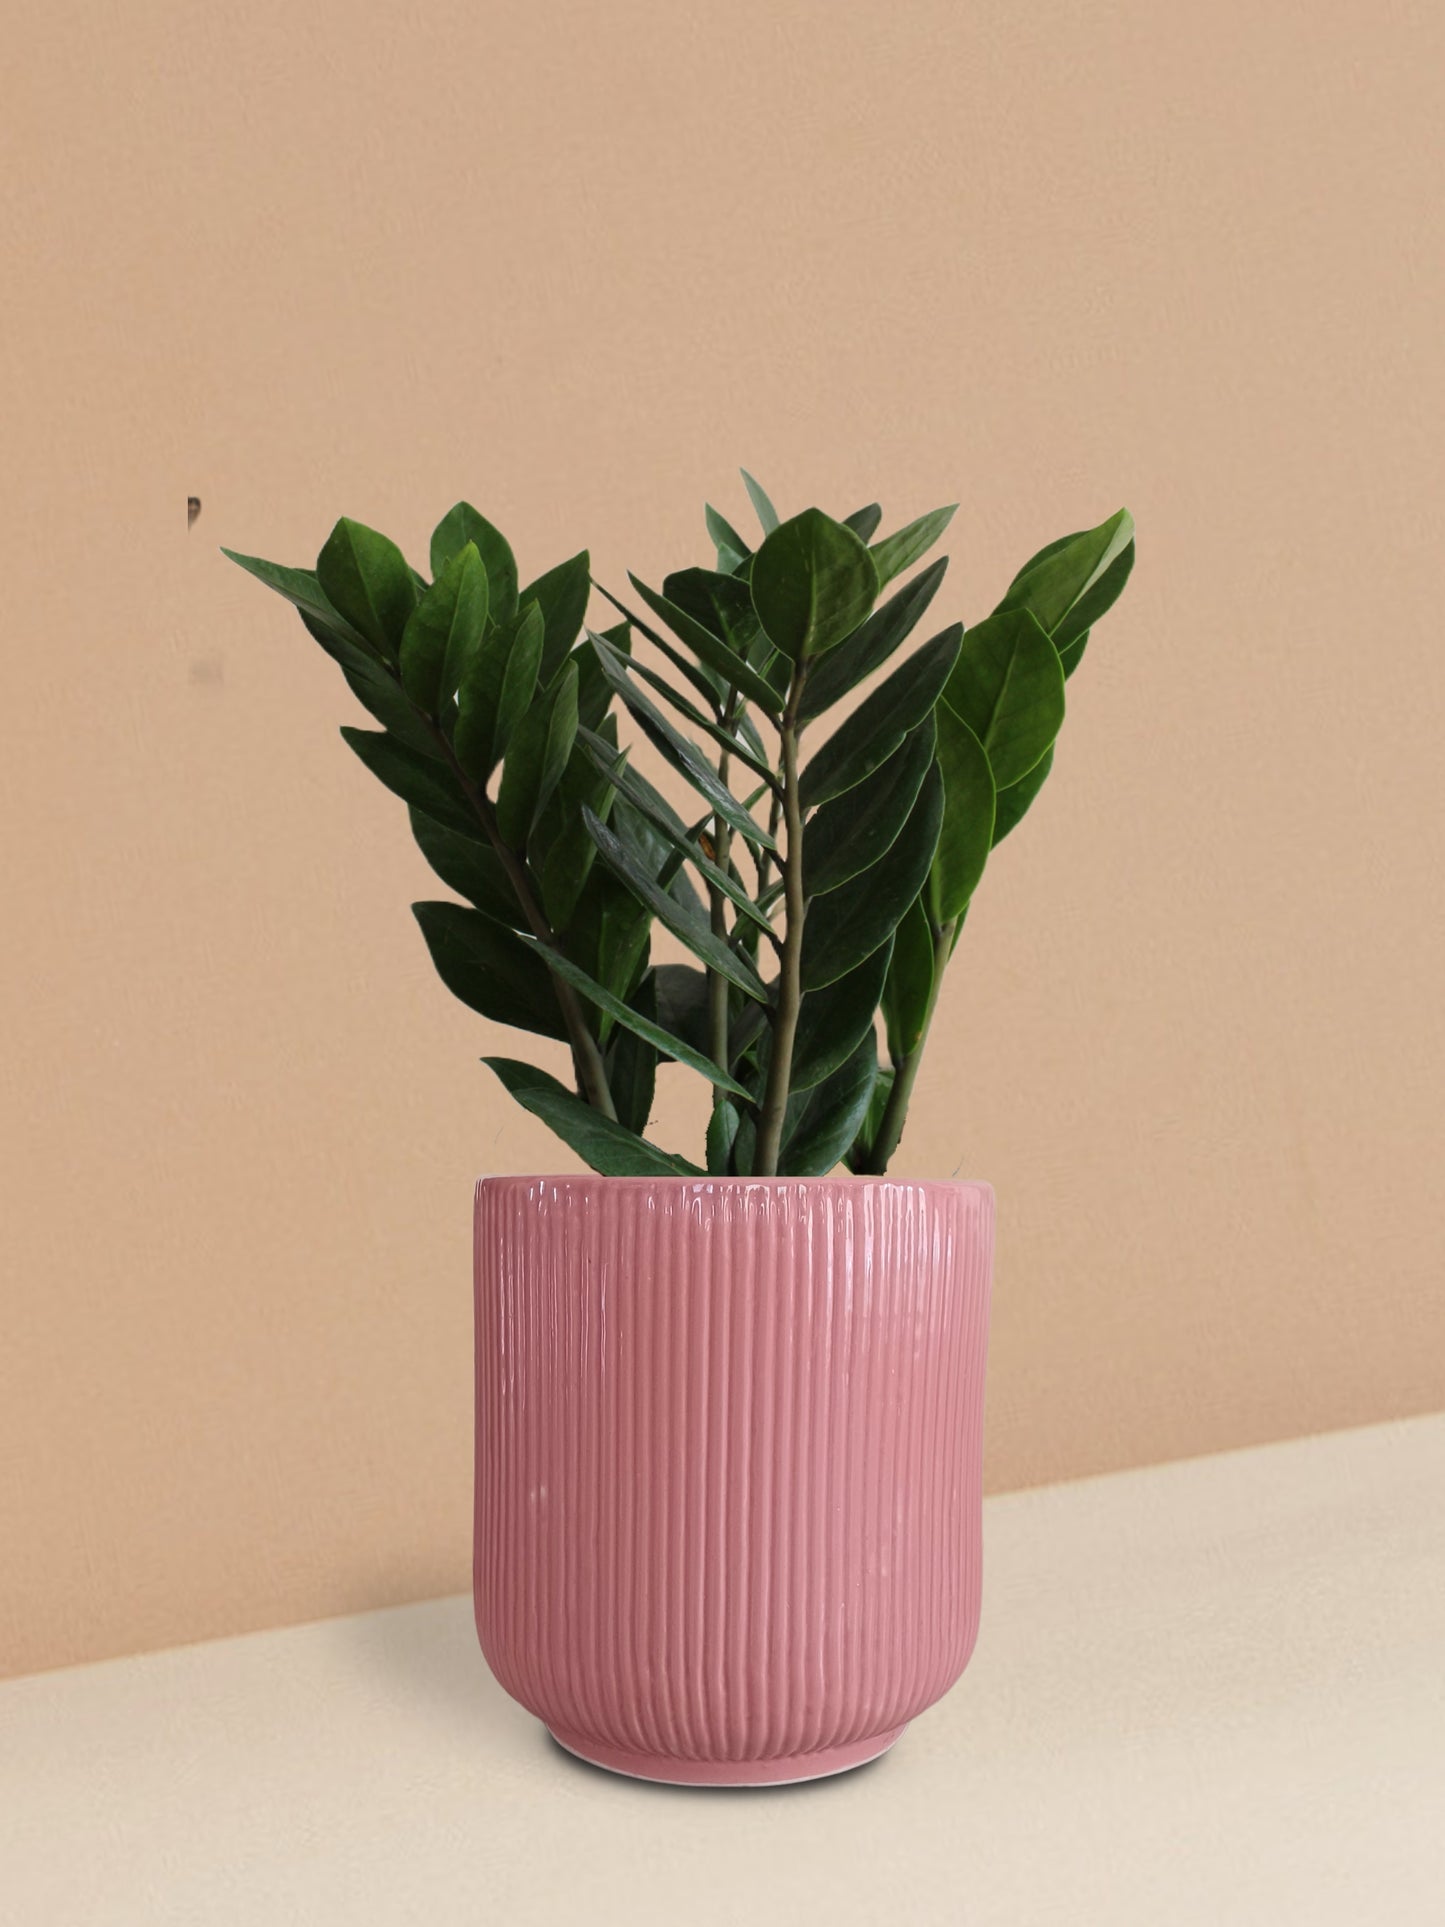 ZZ Green Plant in Ceramic Pot (Medium)